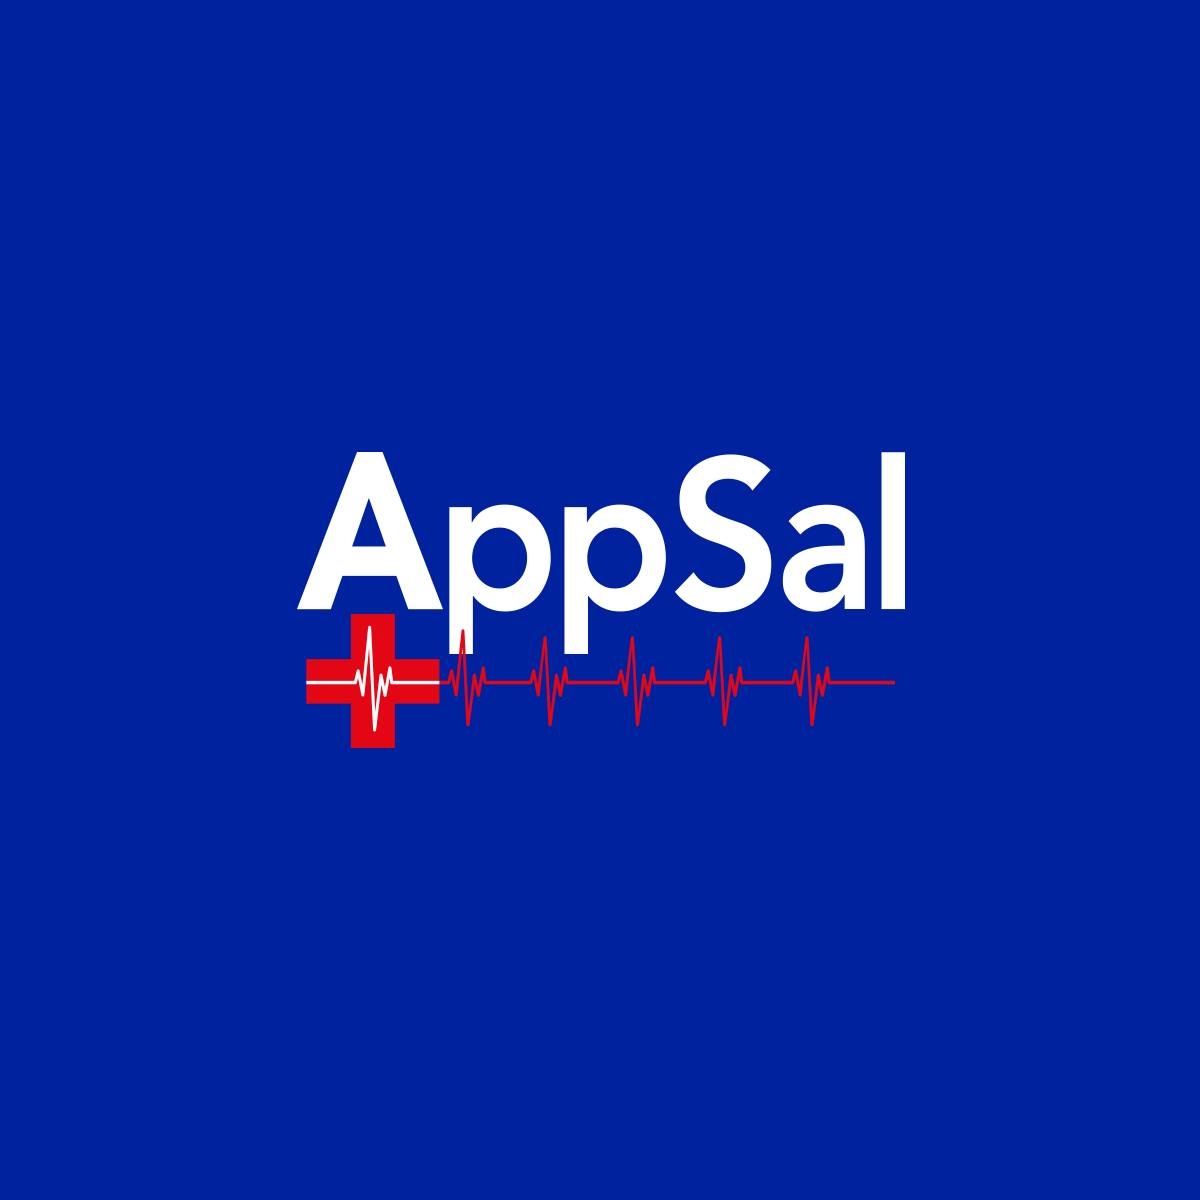 AppSal